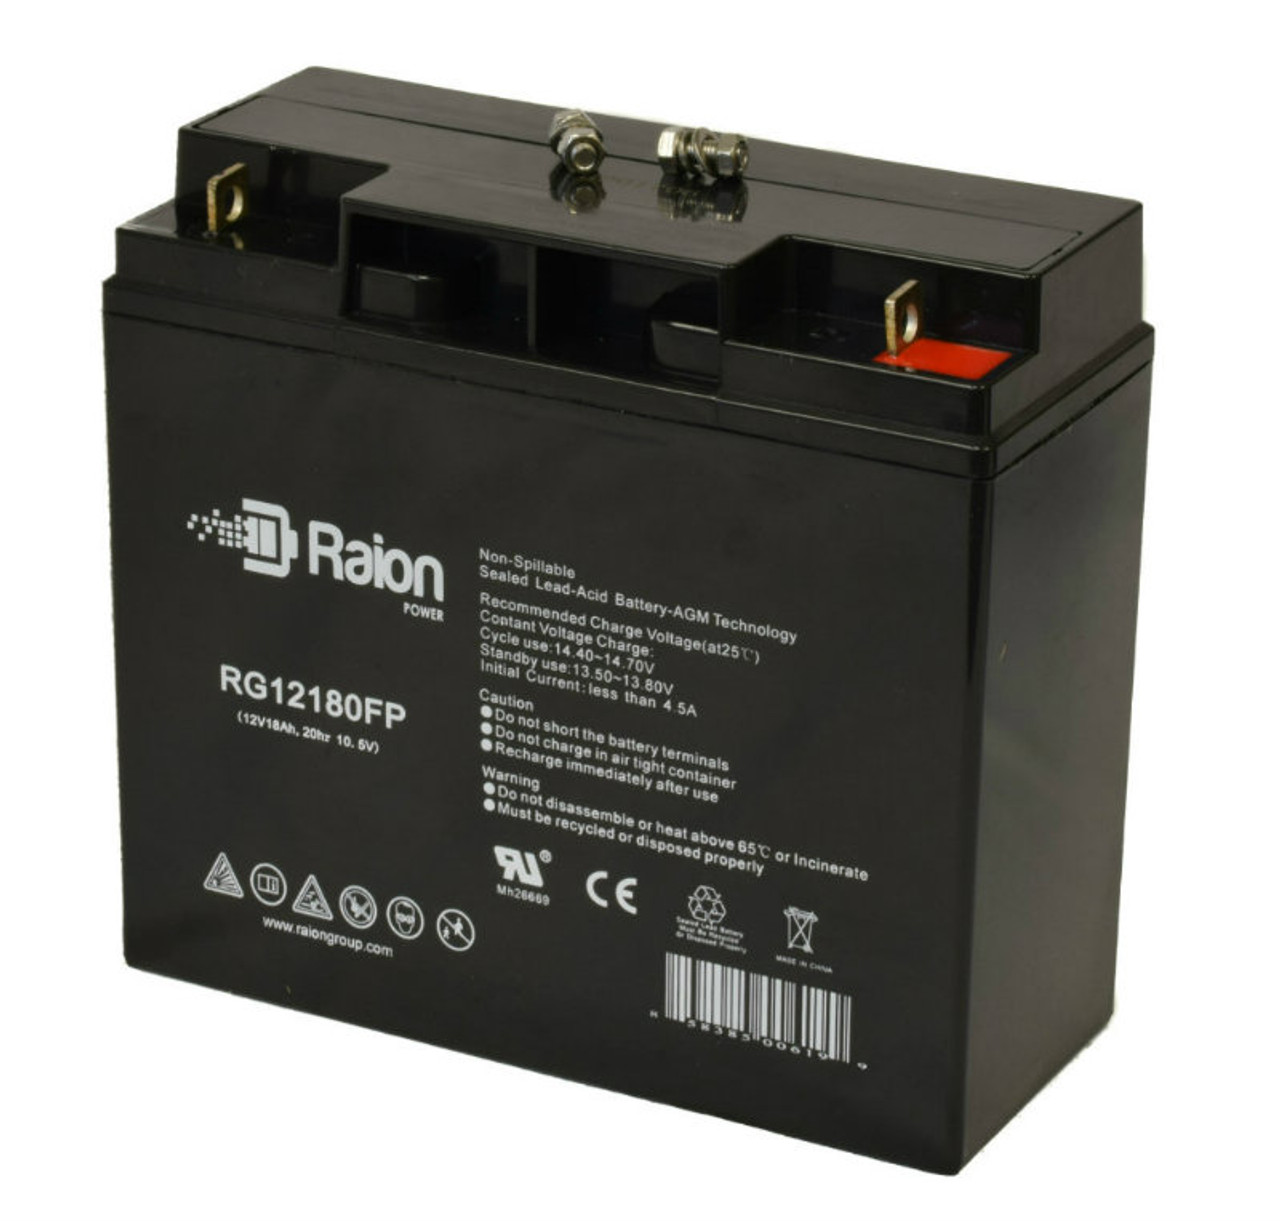 Raion Power Replacement 12V 18Ah Battery for Landport LP12-18 - 1 Pack